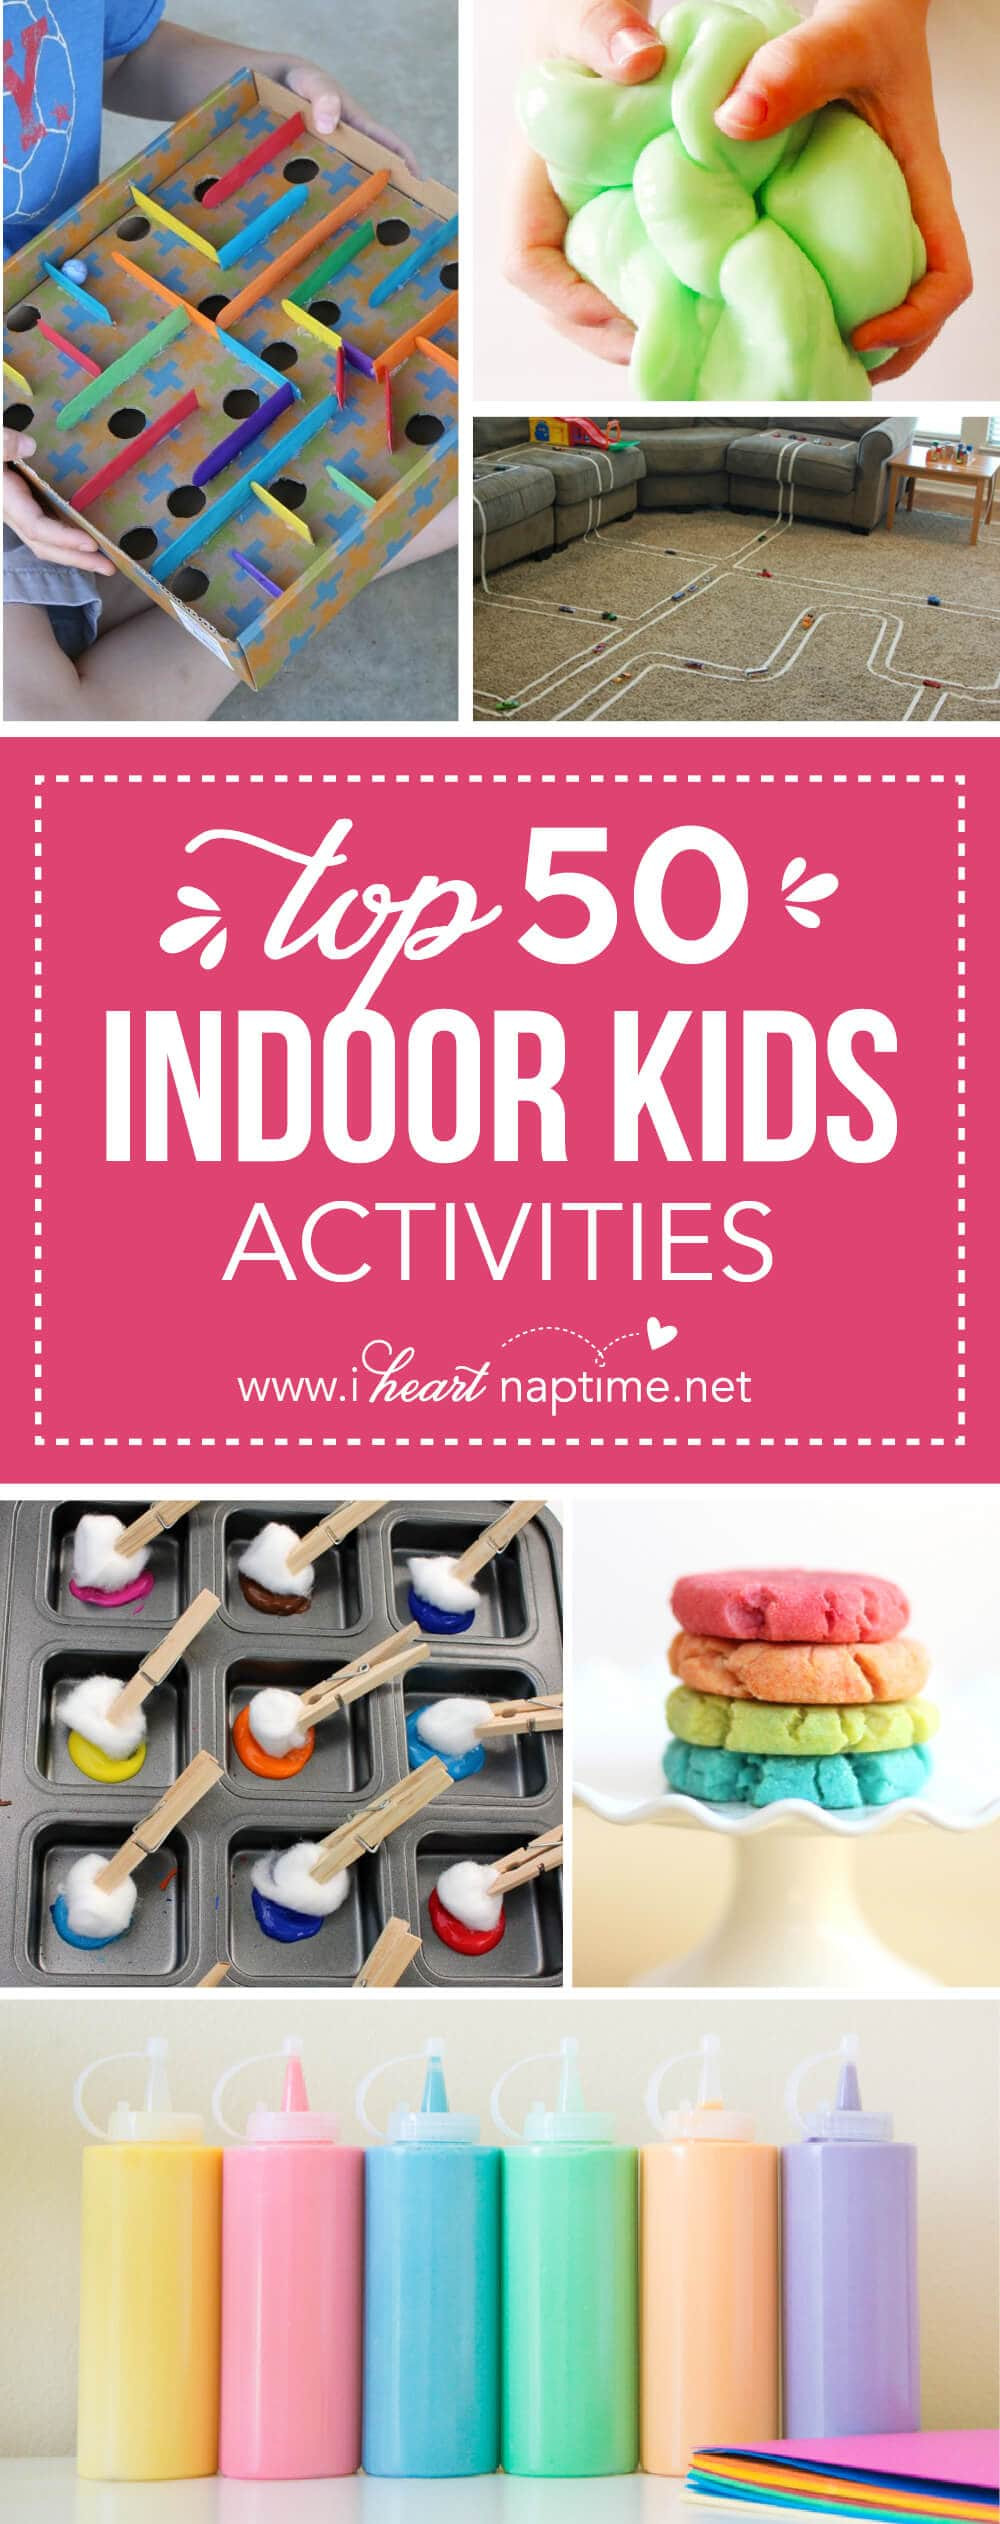 Indoor Kids Activities
 Top 50 Indoor Kids Activities I Heart Nap Time